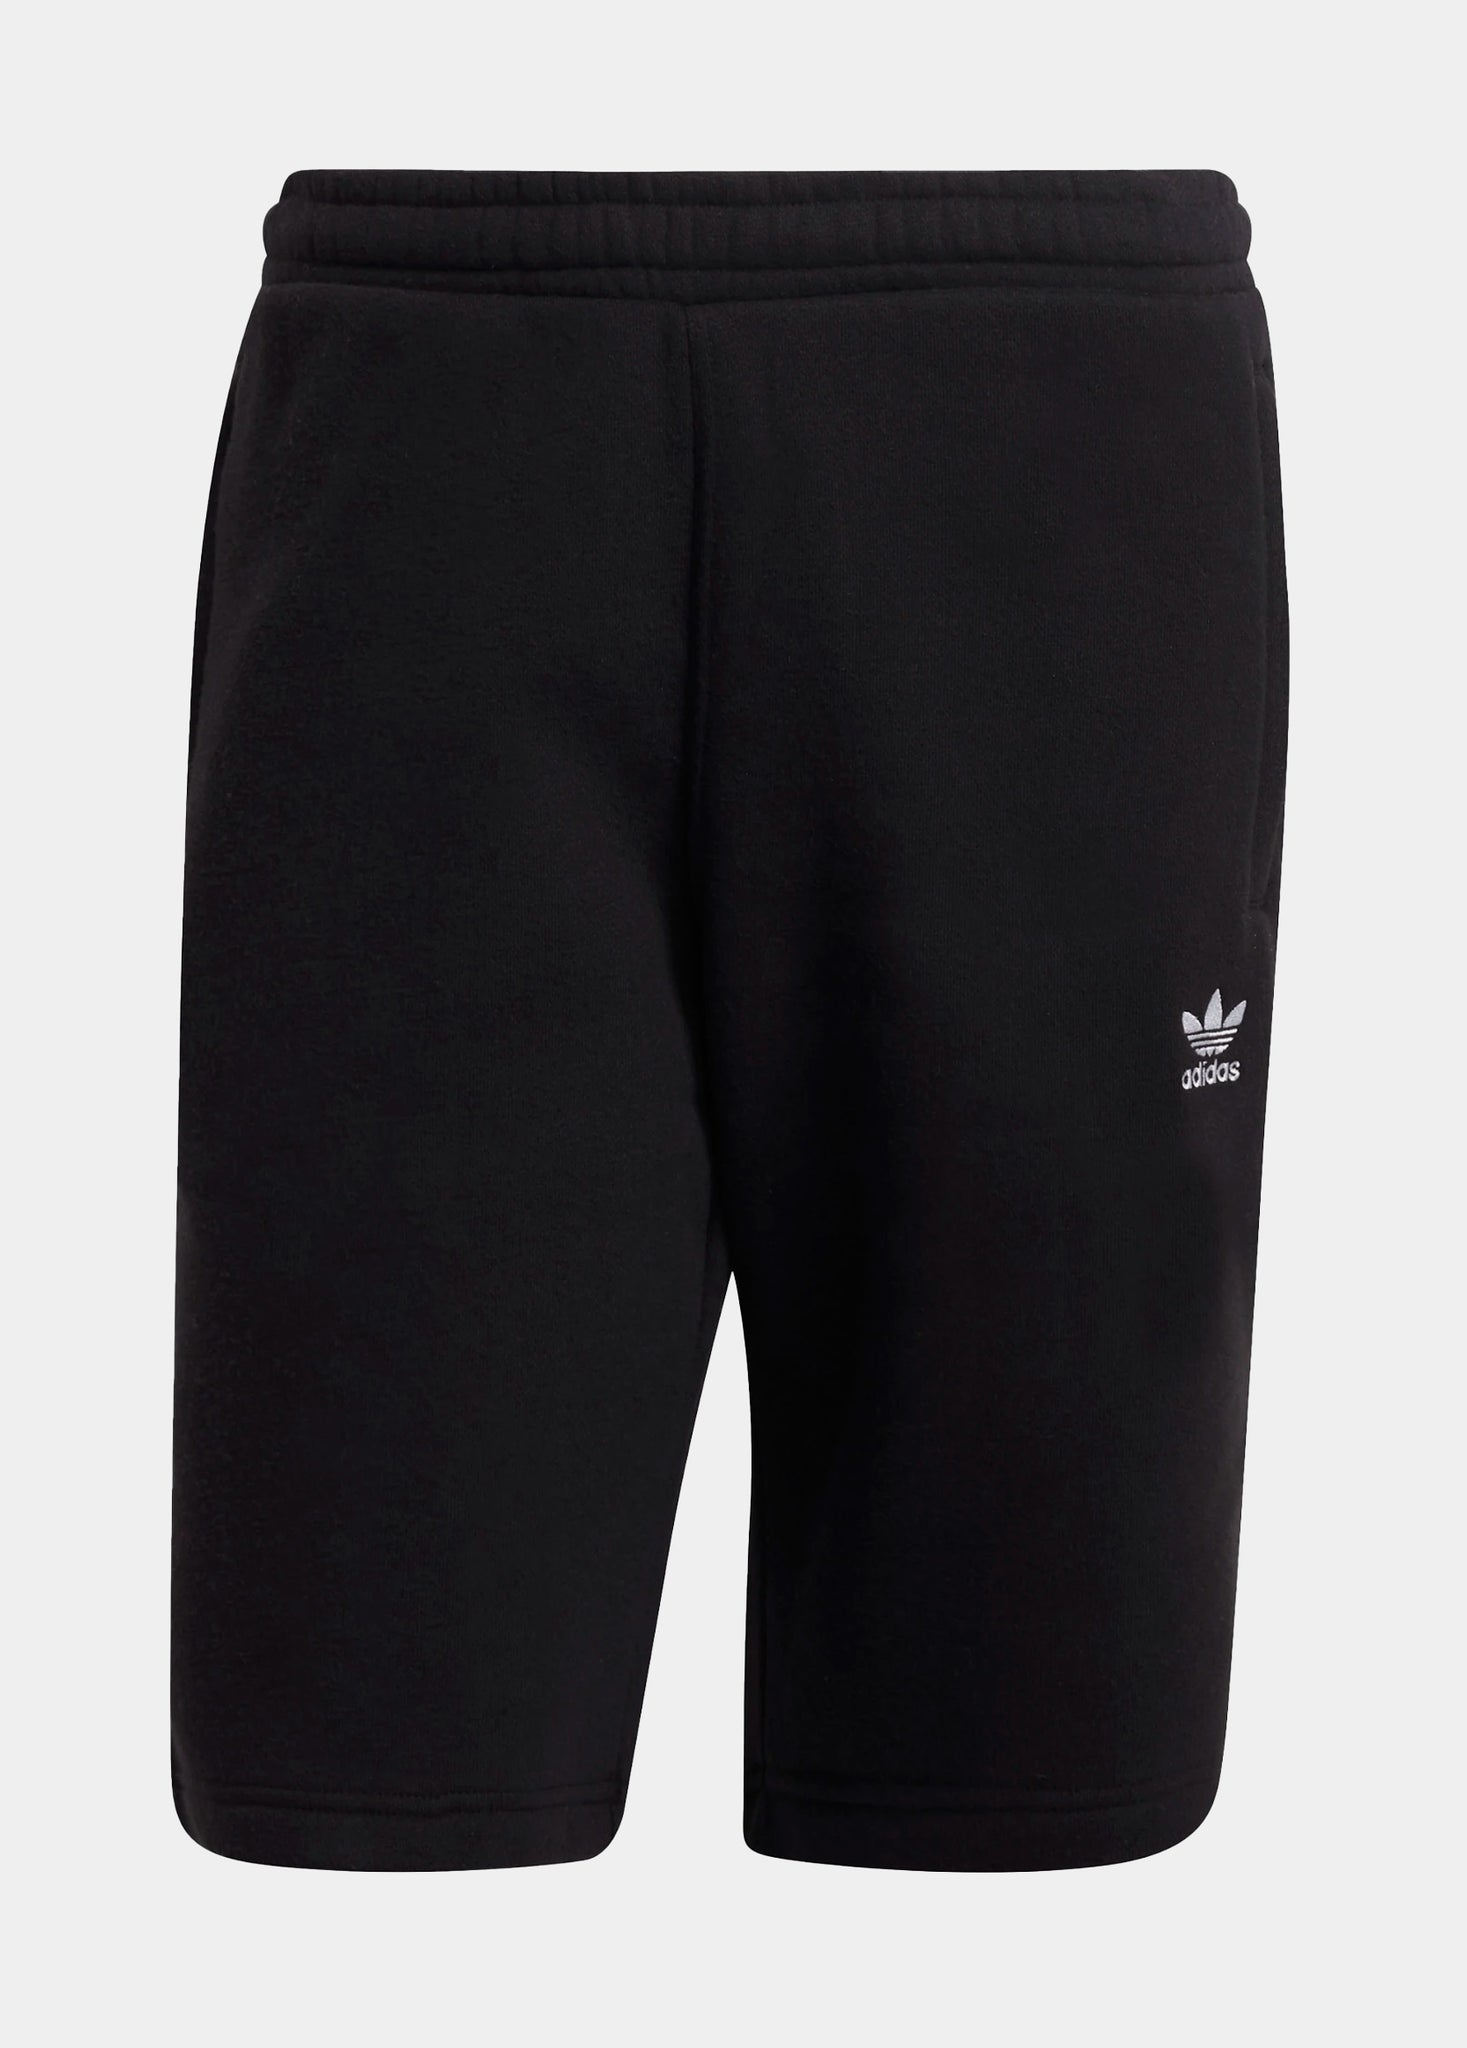 adidas Shorts – H34681 Adicolor Black Mens Shoe Shorts Essentials Trefoil Palace